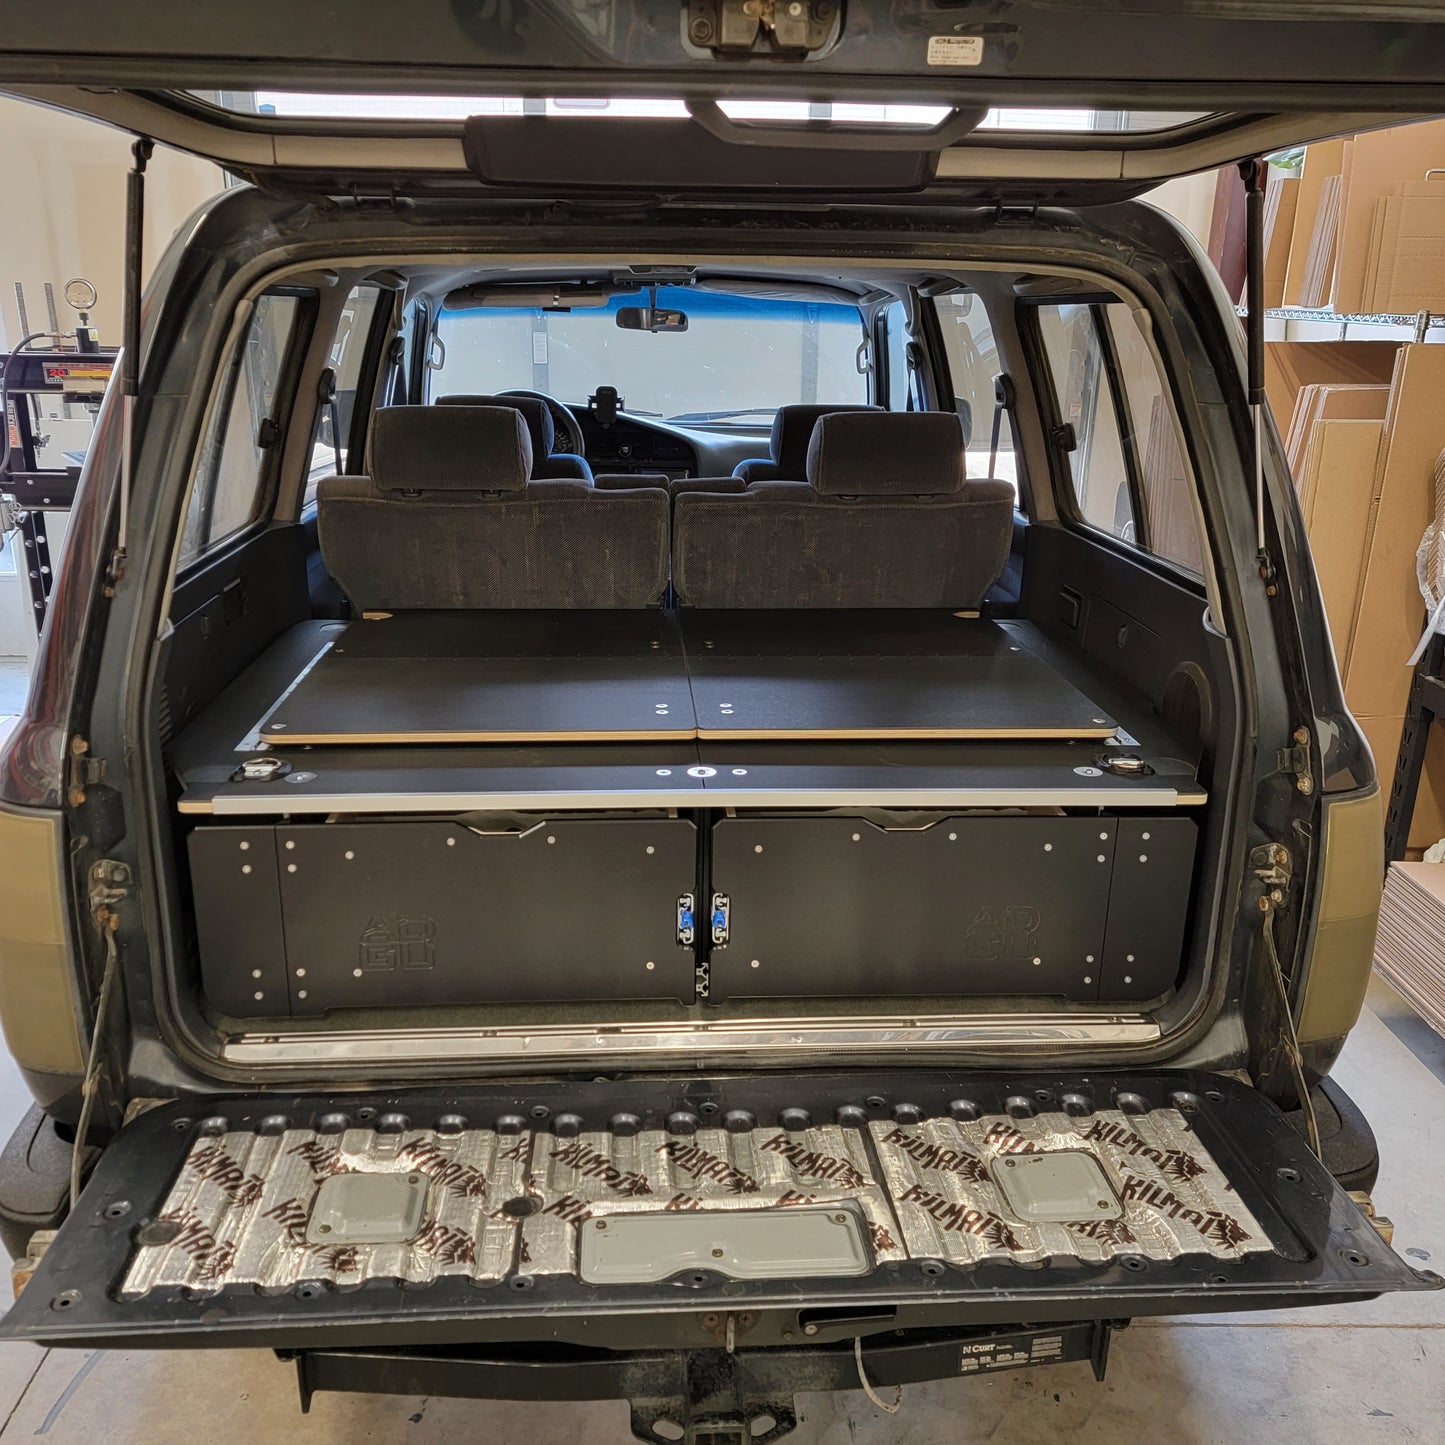 80 Series Toyota Landcruiser drawer system with sleeping platform for vehicle organization